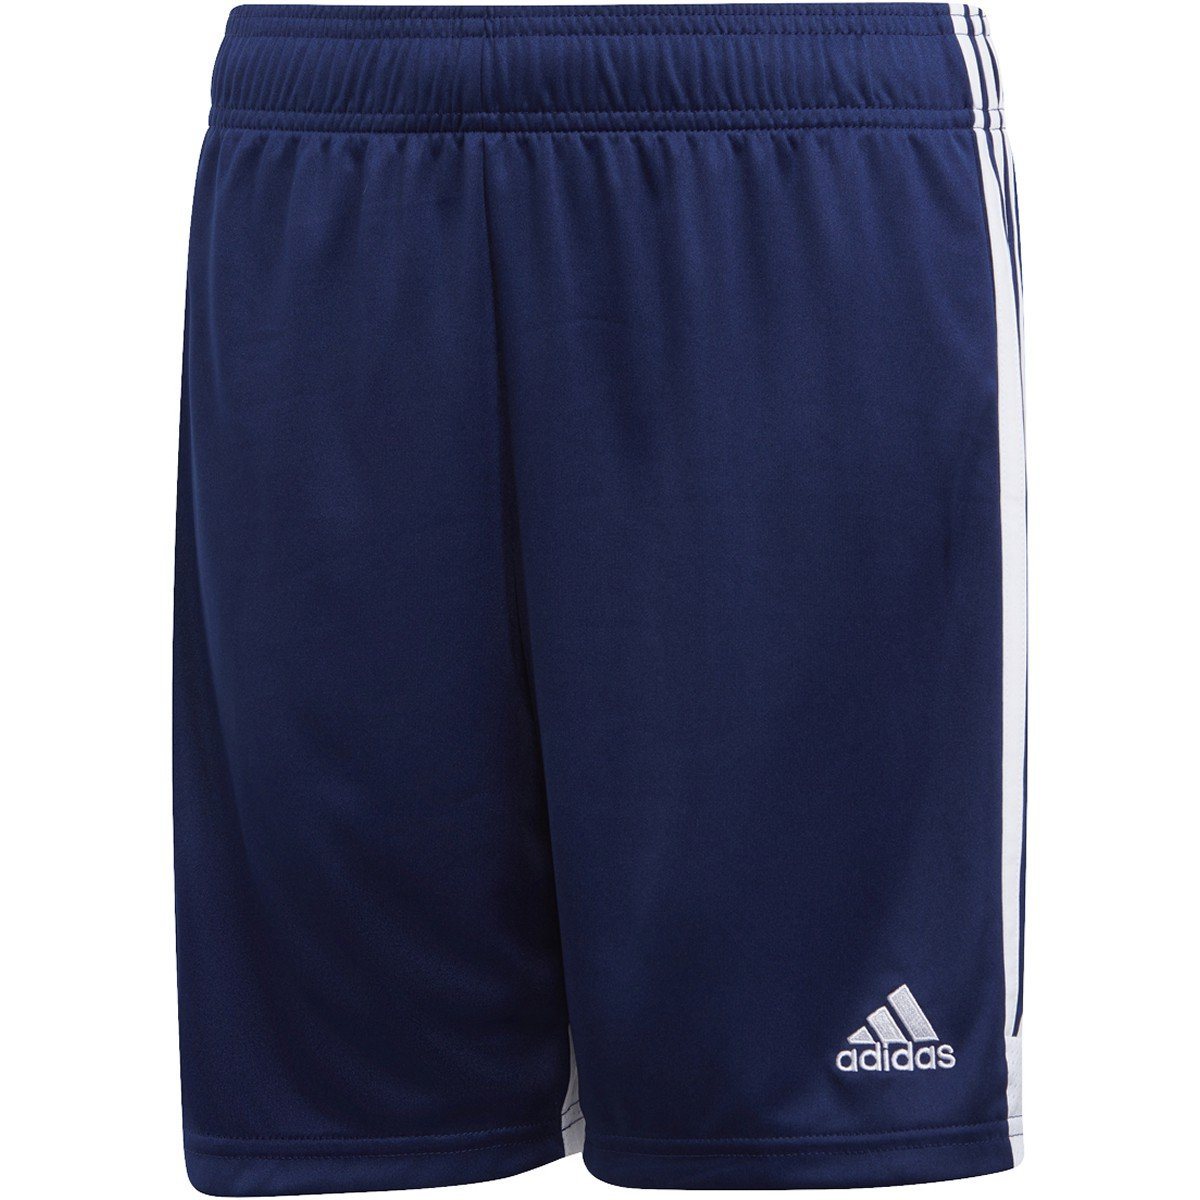 adidas Youth Tastigo 19 Shorts | DP3172 Soccer Apparel adidas XXS dark blue/white 